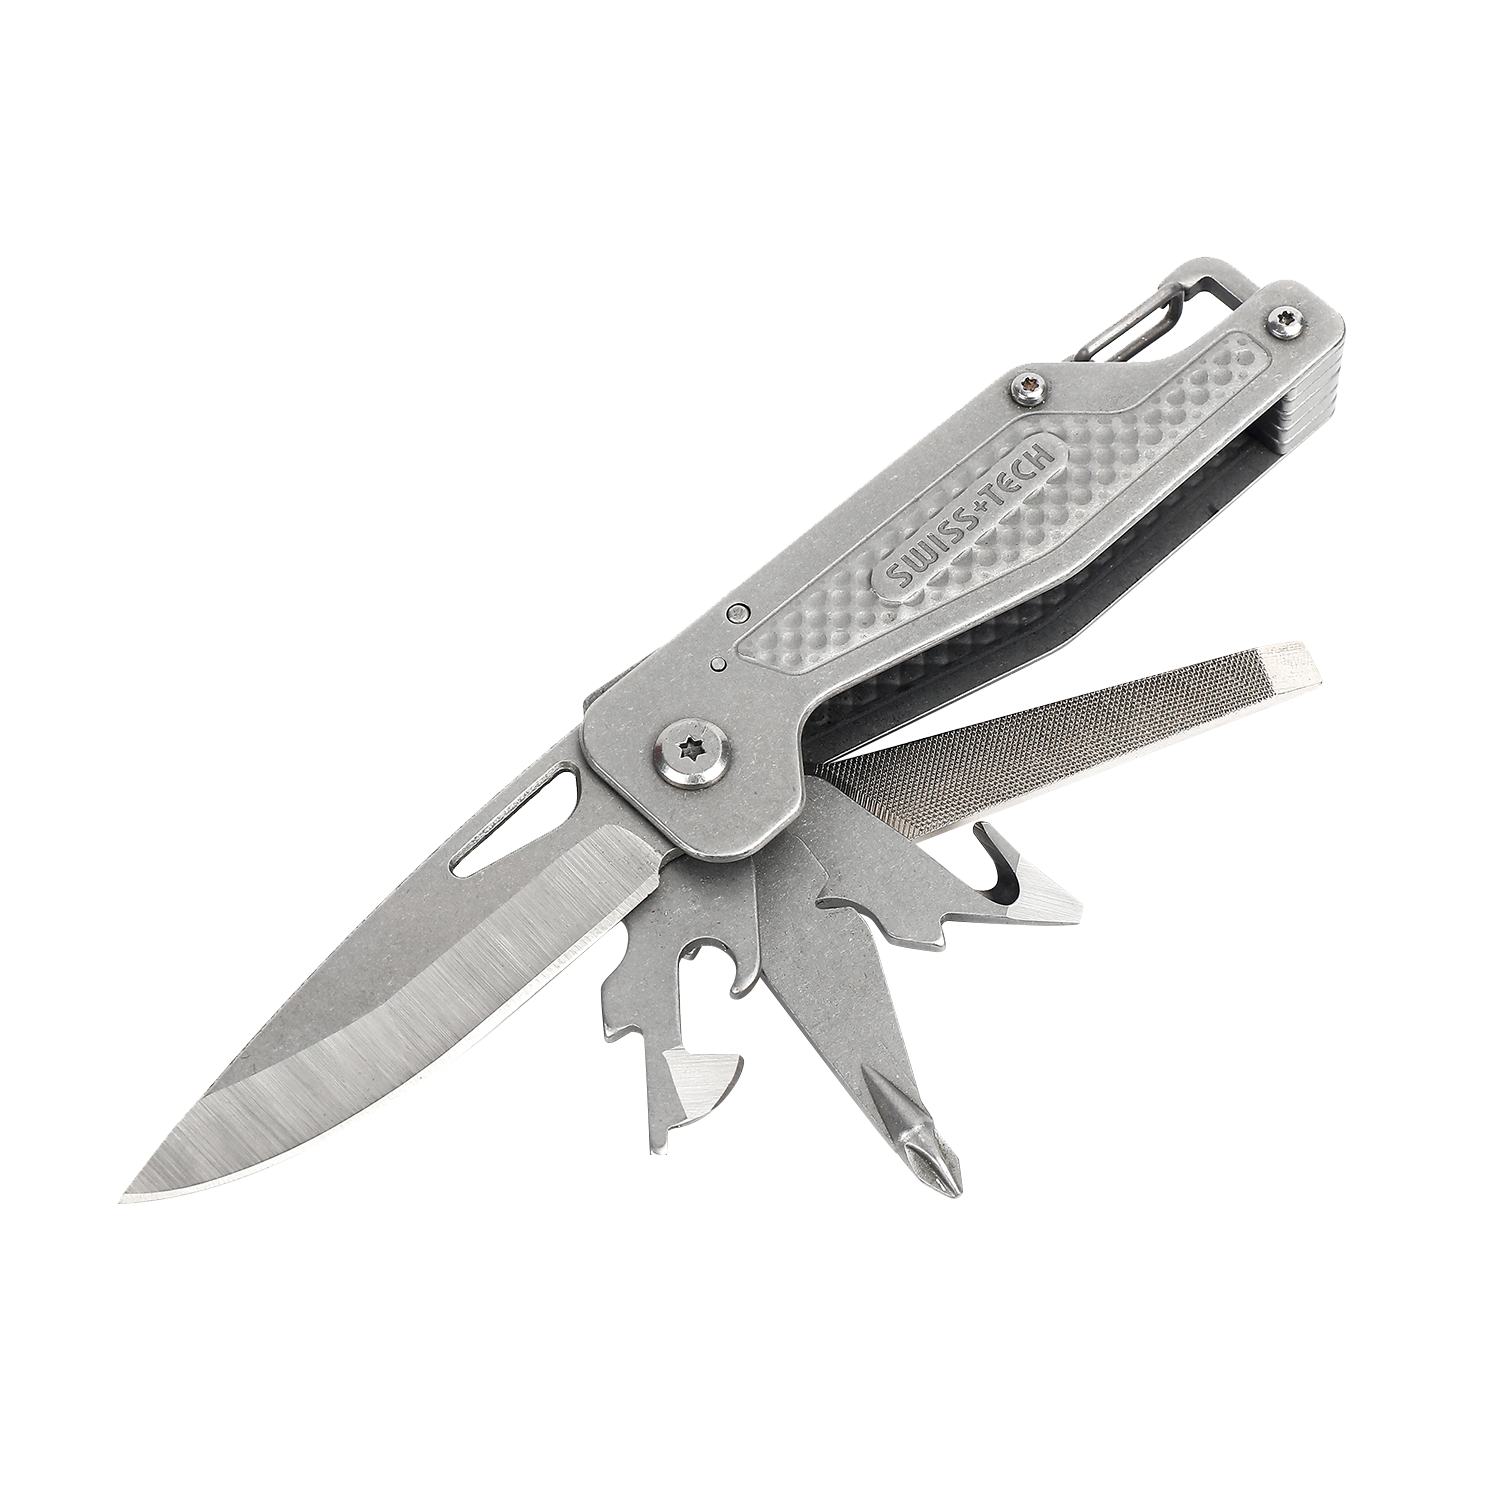 SWISS + TECH Multi-tool Multi-function knife 13-IN-1 Silver NEW from Japan  